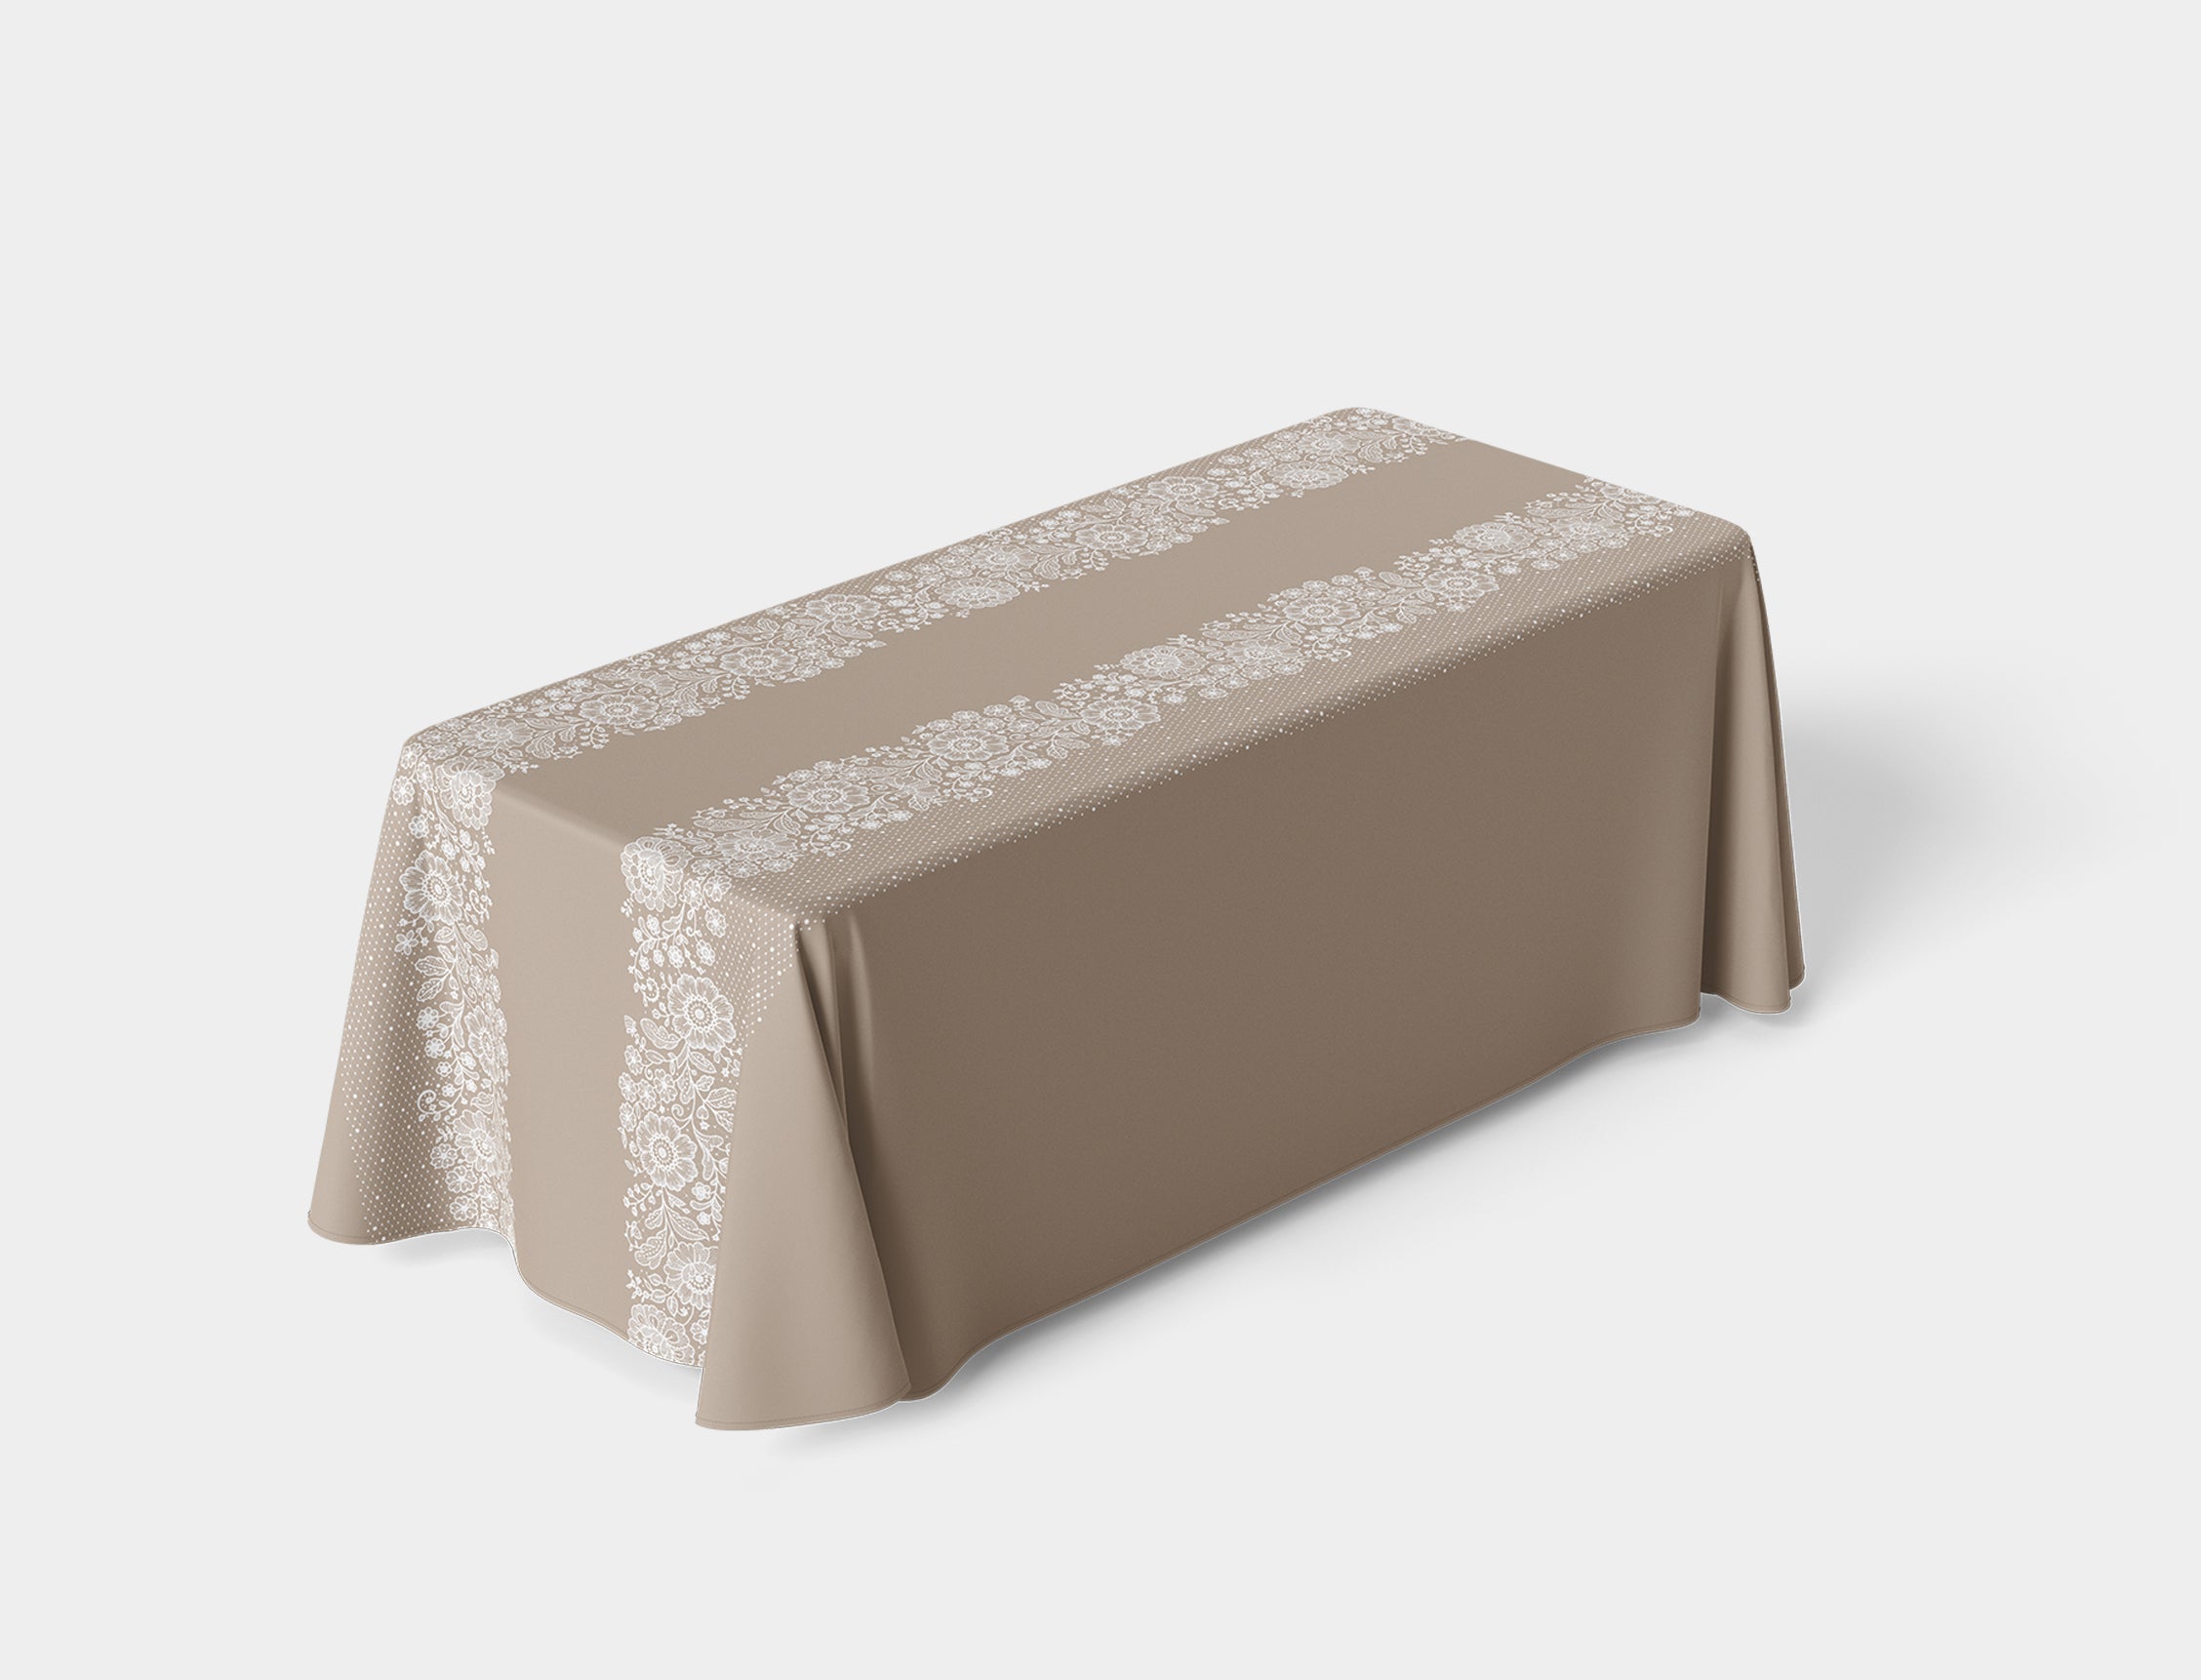 Slate Tablecloth